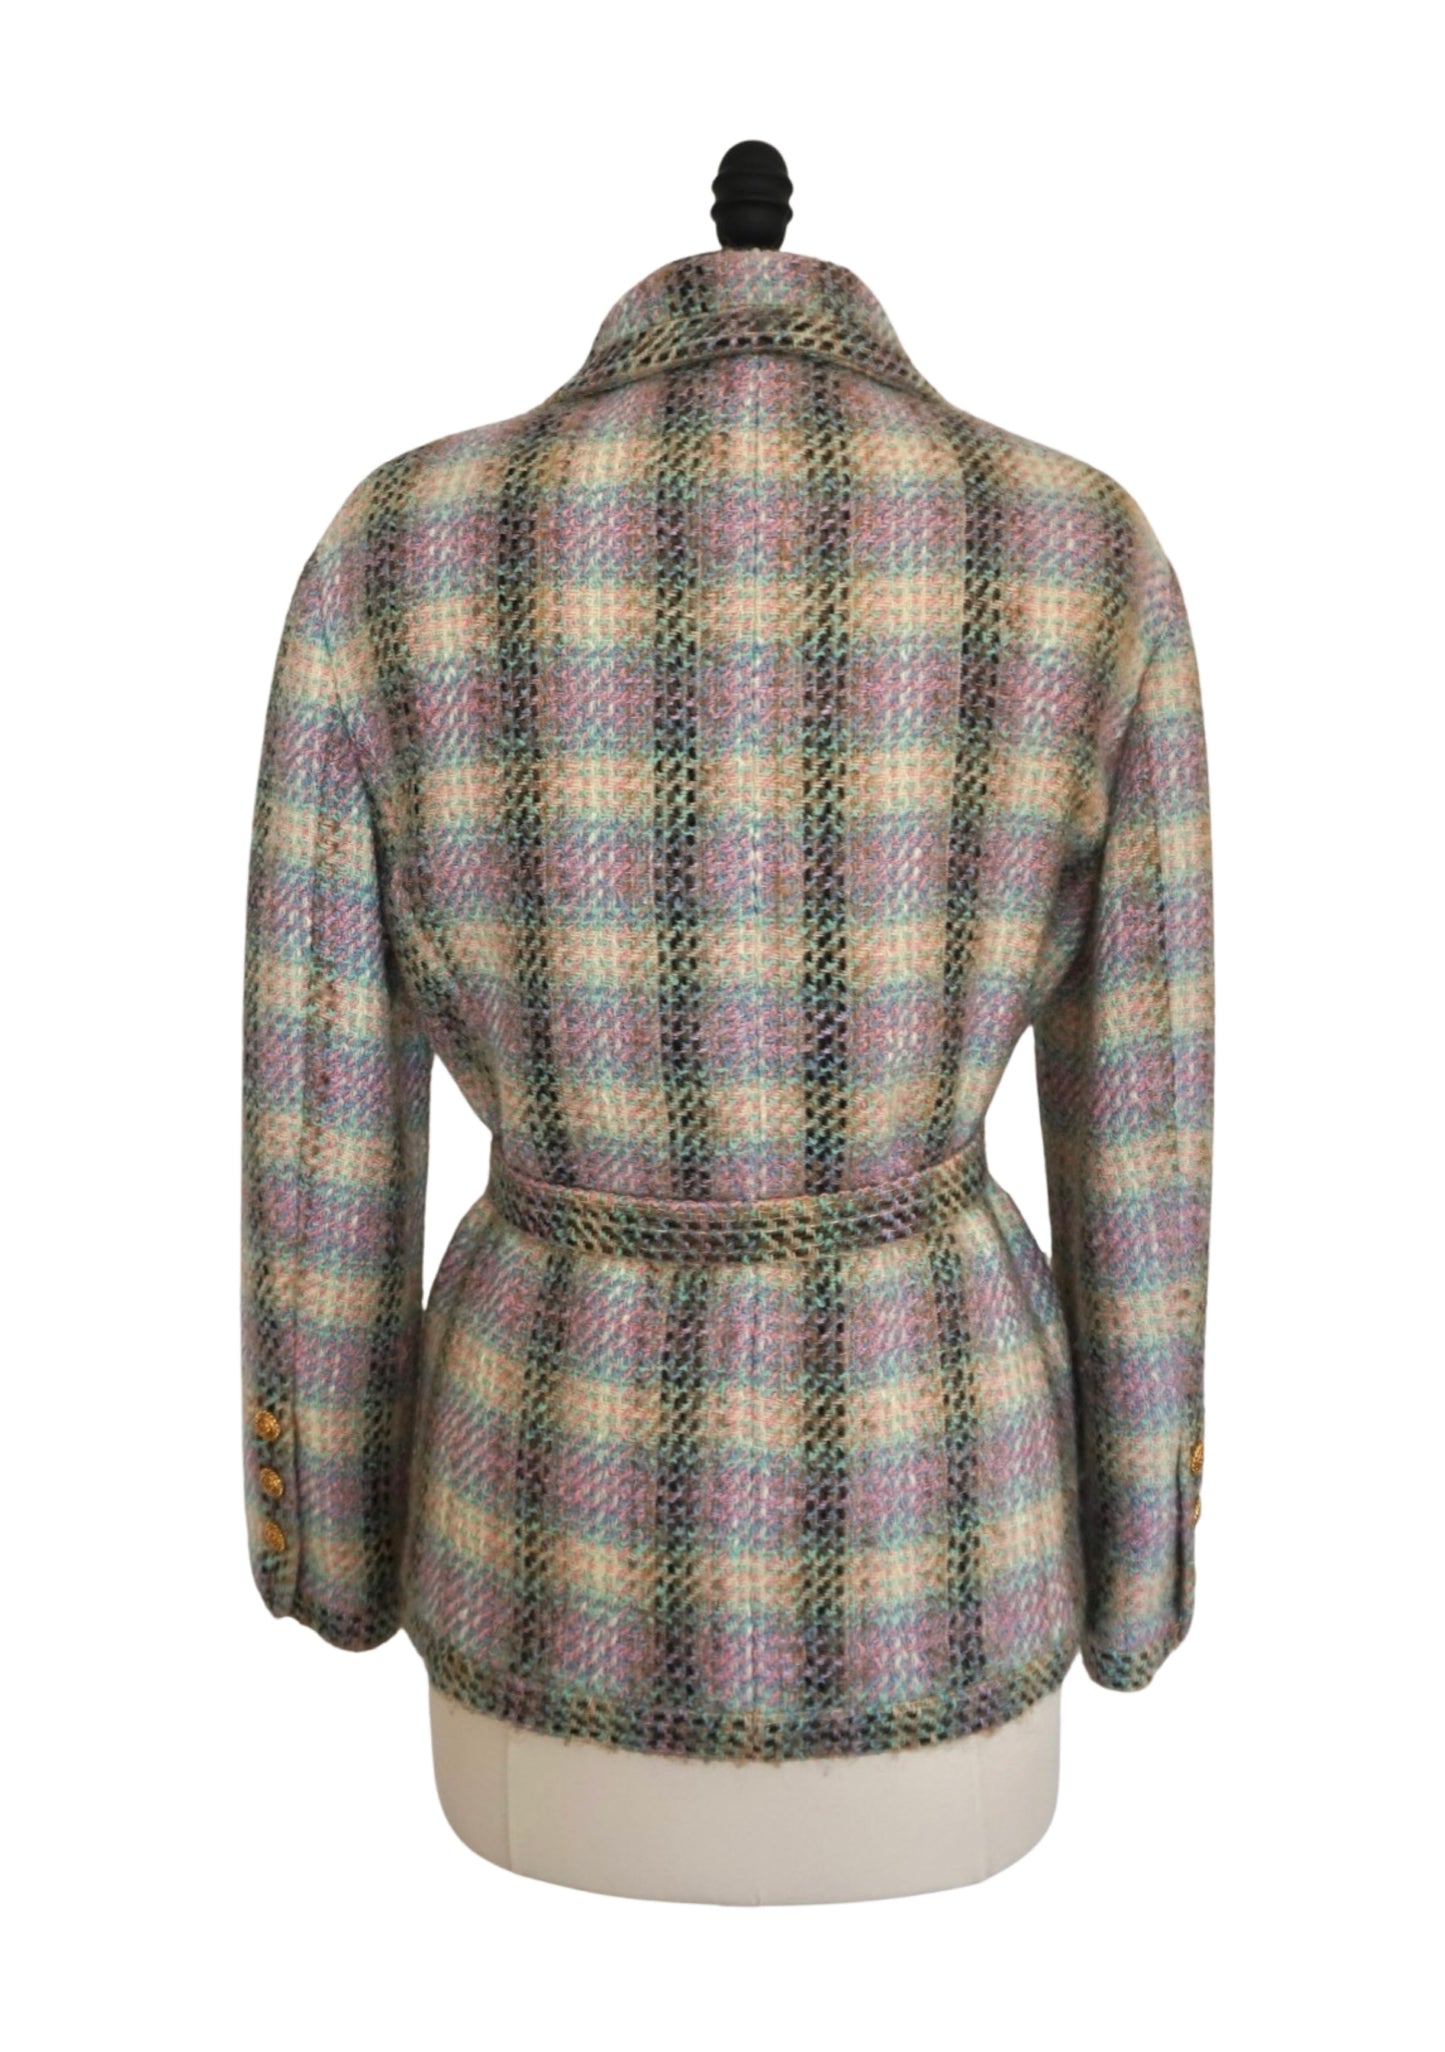 Chanel 1980's Rainbow Tweed Jacket with Belt